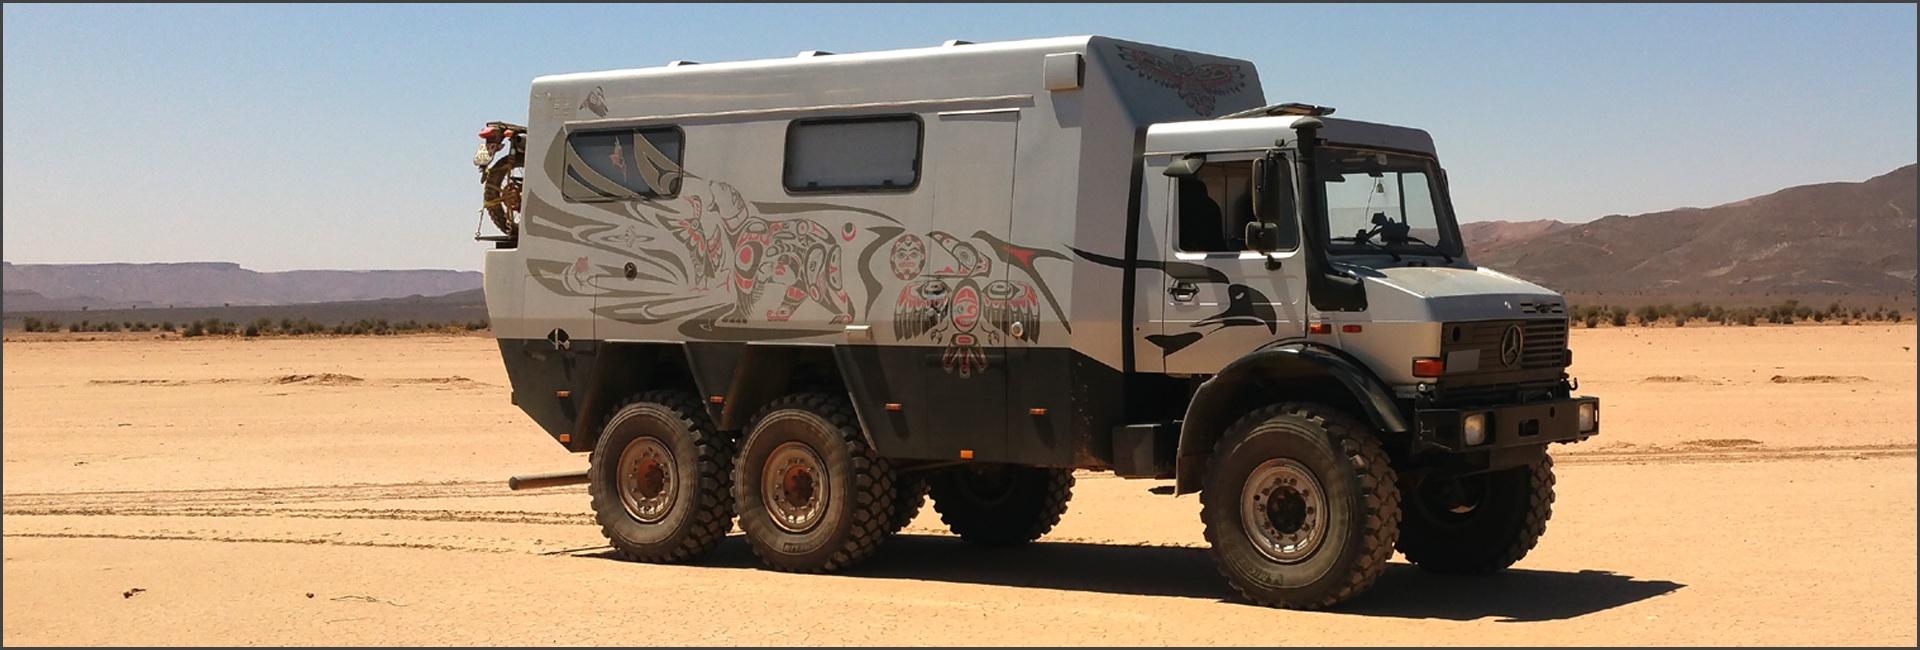 Unimog U2450 6x6 Expedition Truck